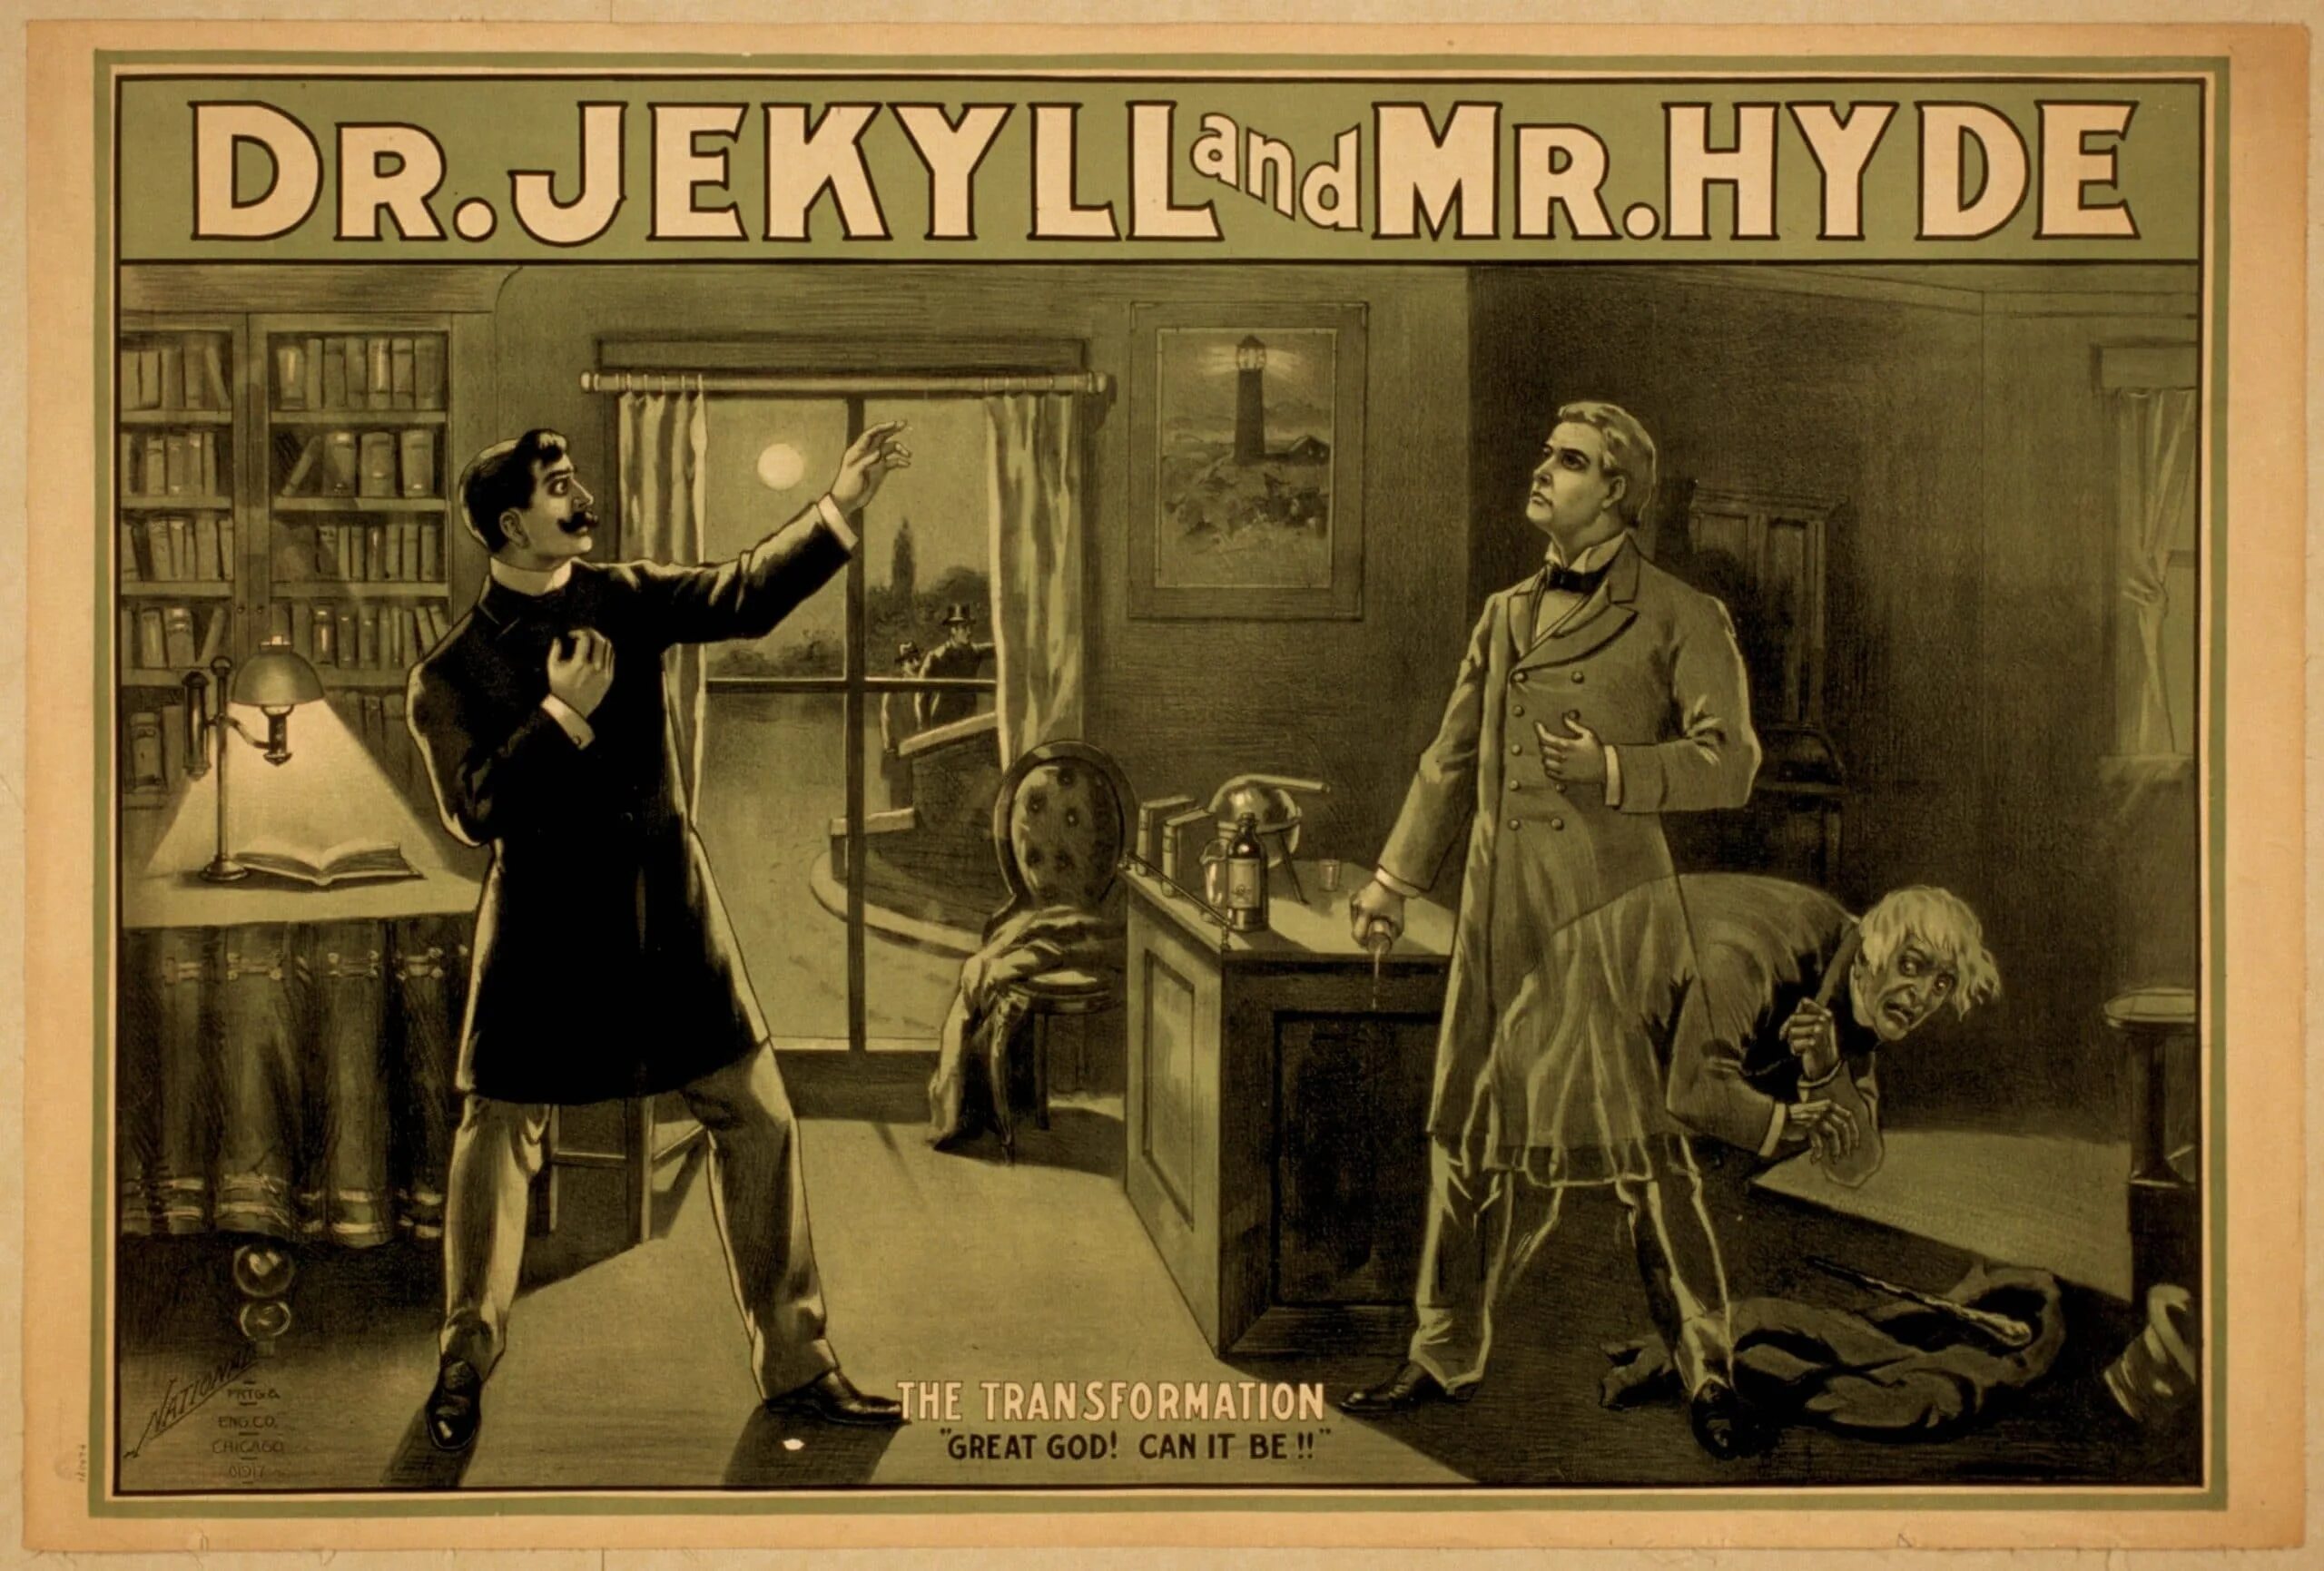 История джекила и хайда. Мистер Хайд и доктор Джекил. Стивенсон доктор Джекил 1886.